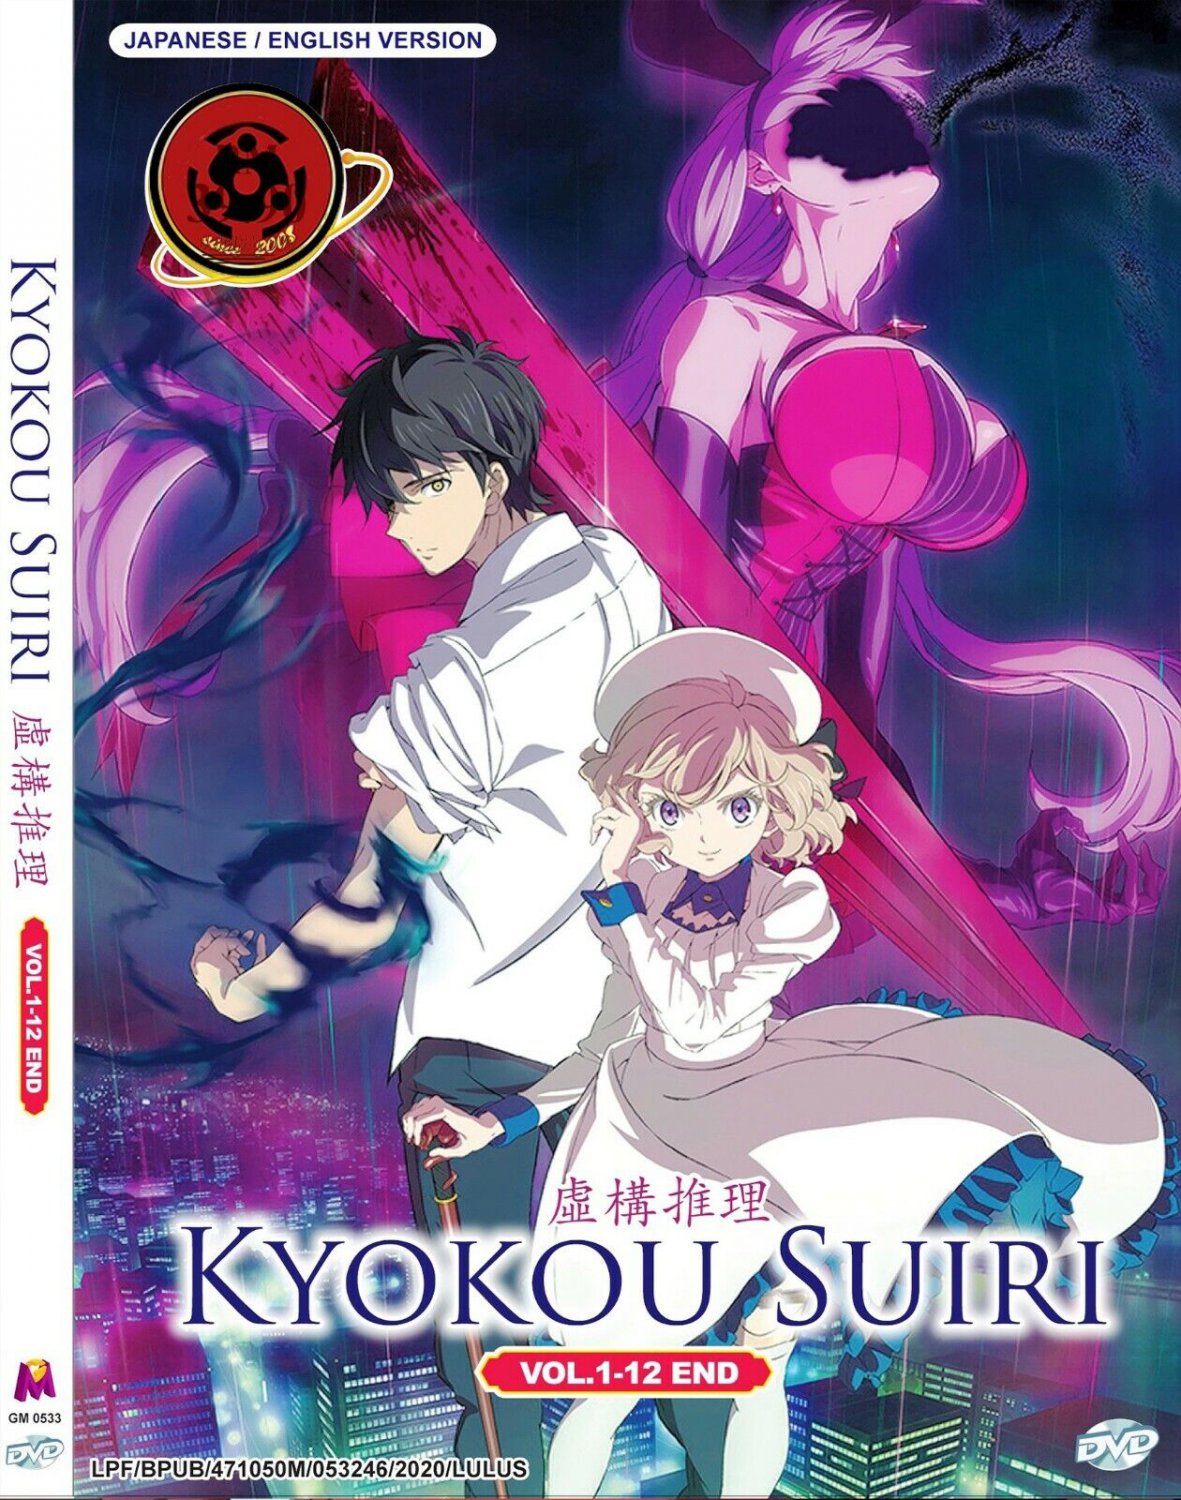 DVD Anime Tokyo Revengers Season 2: Seiya Kessen-Hen (1-13 End) English Dub